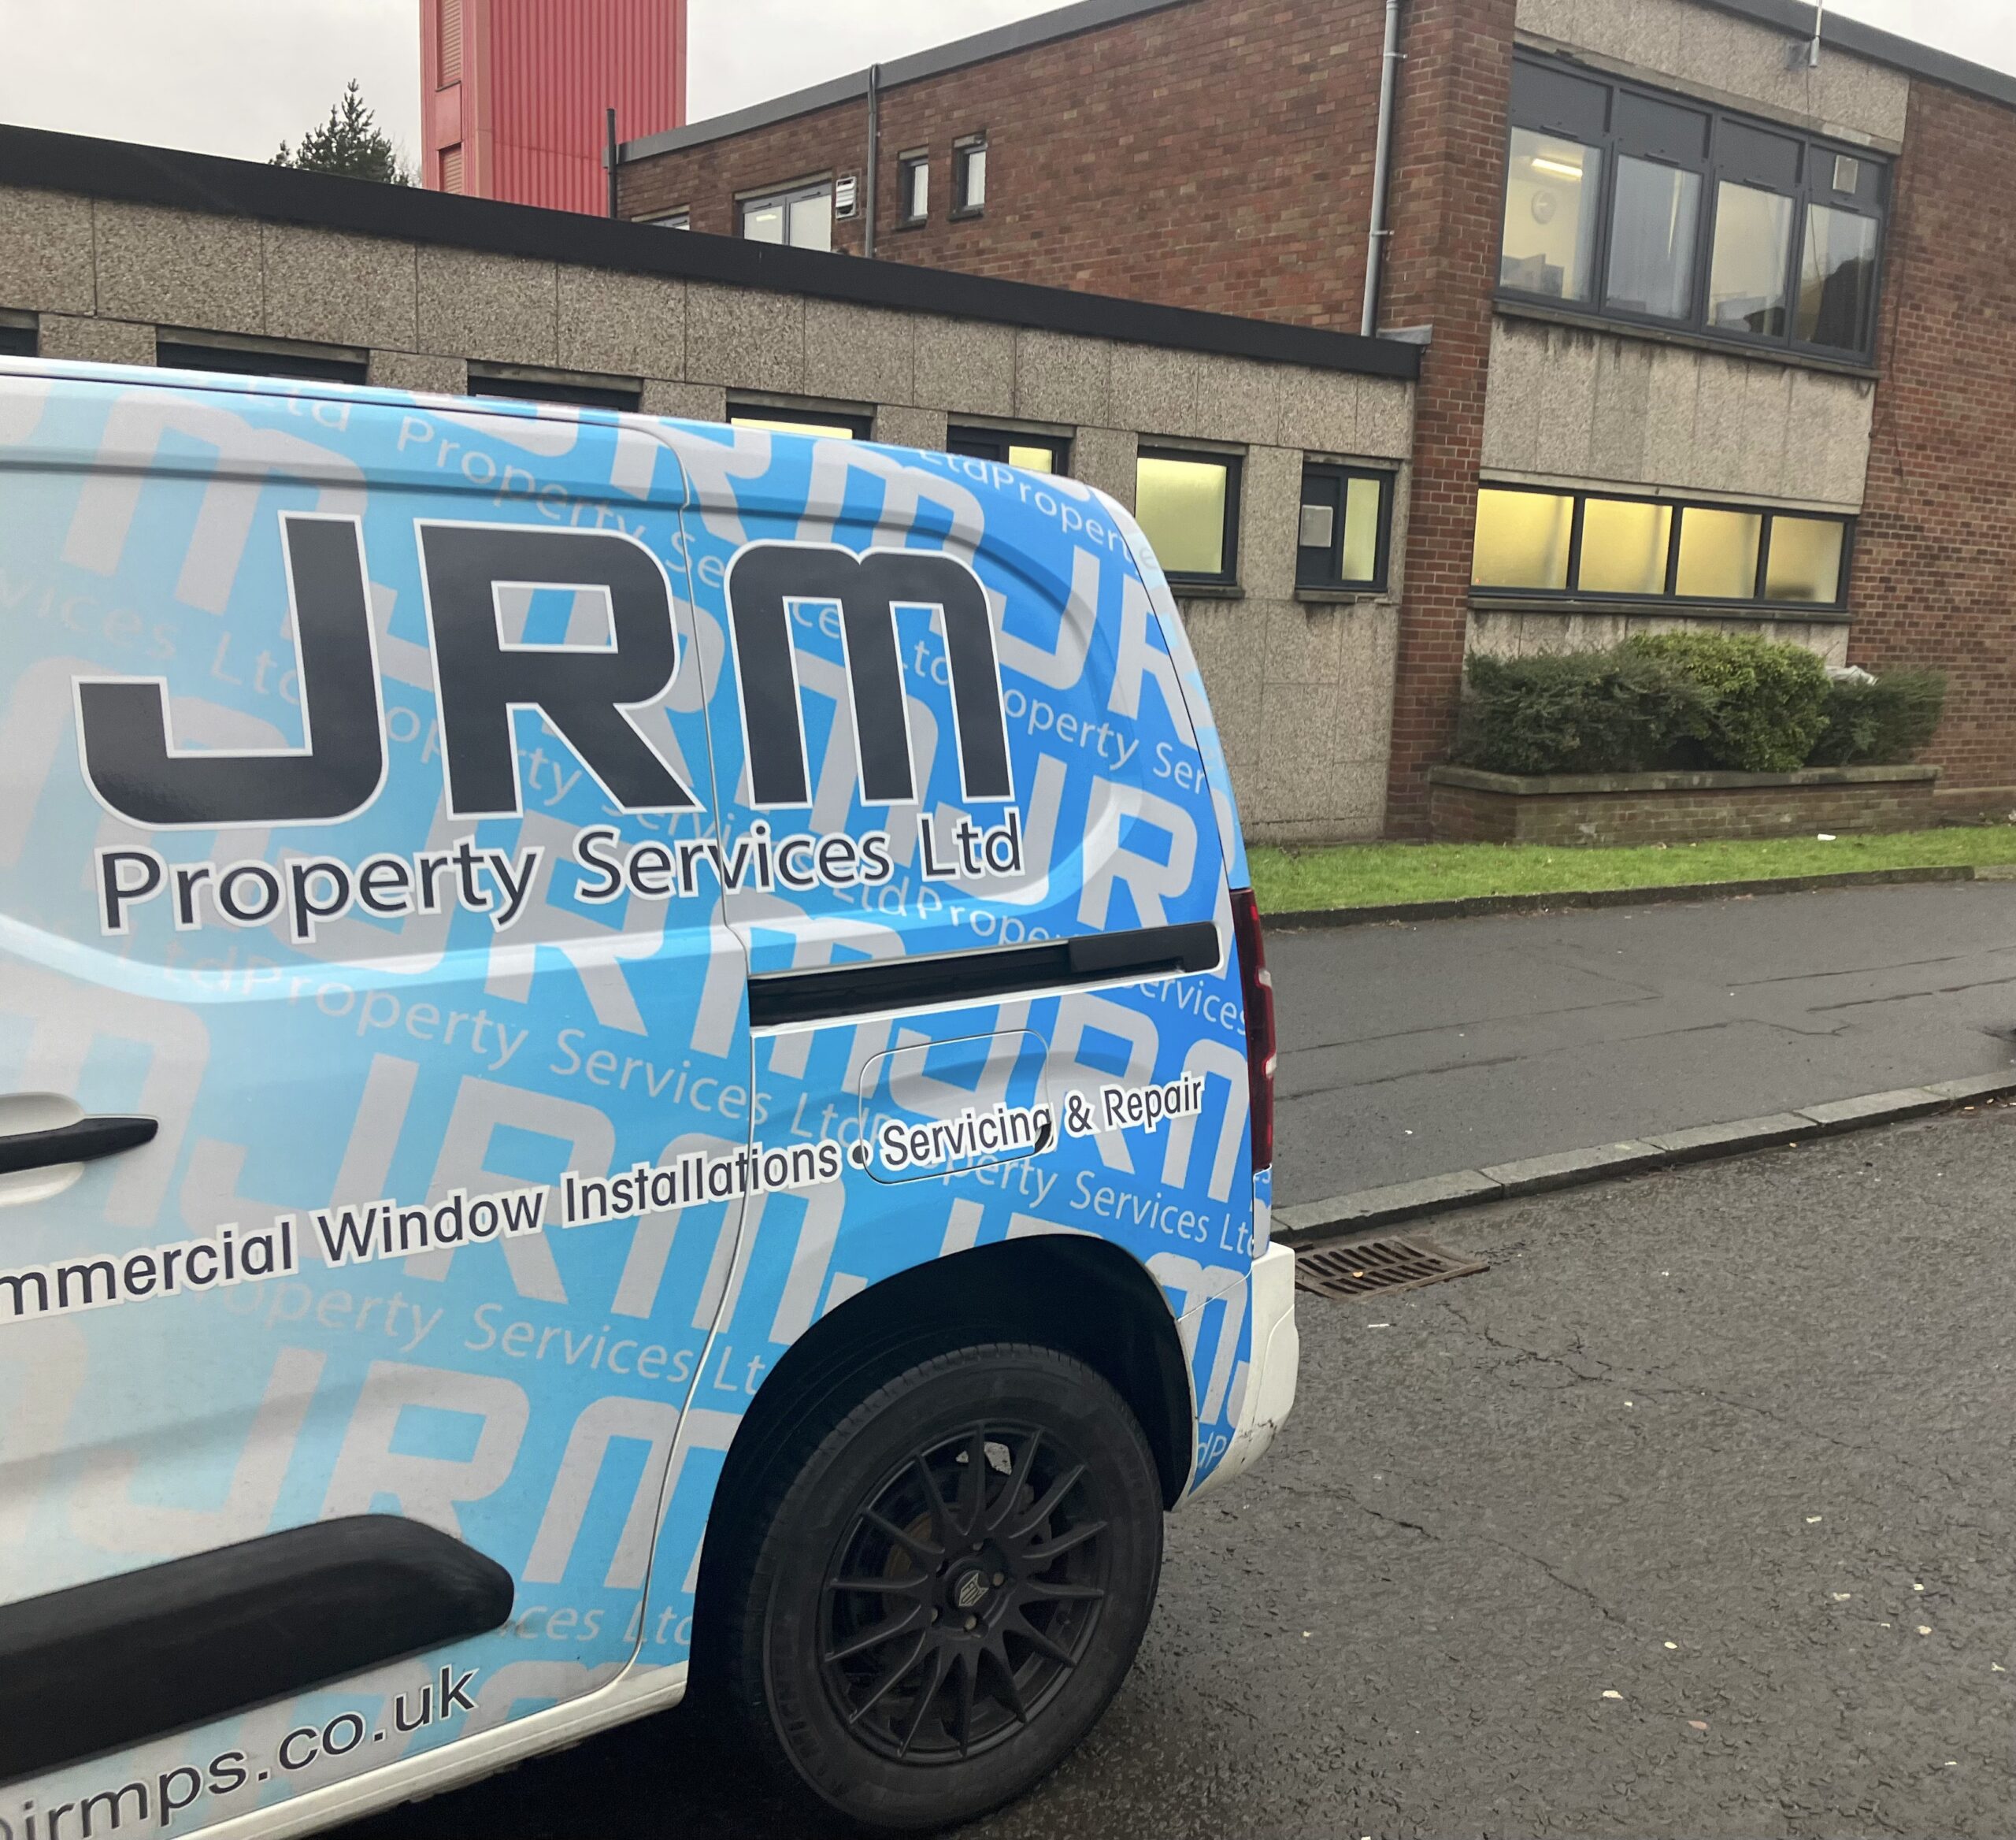 About JRM Property Services